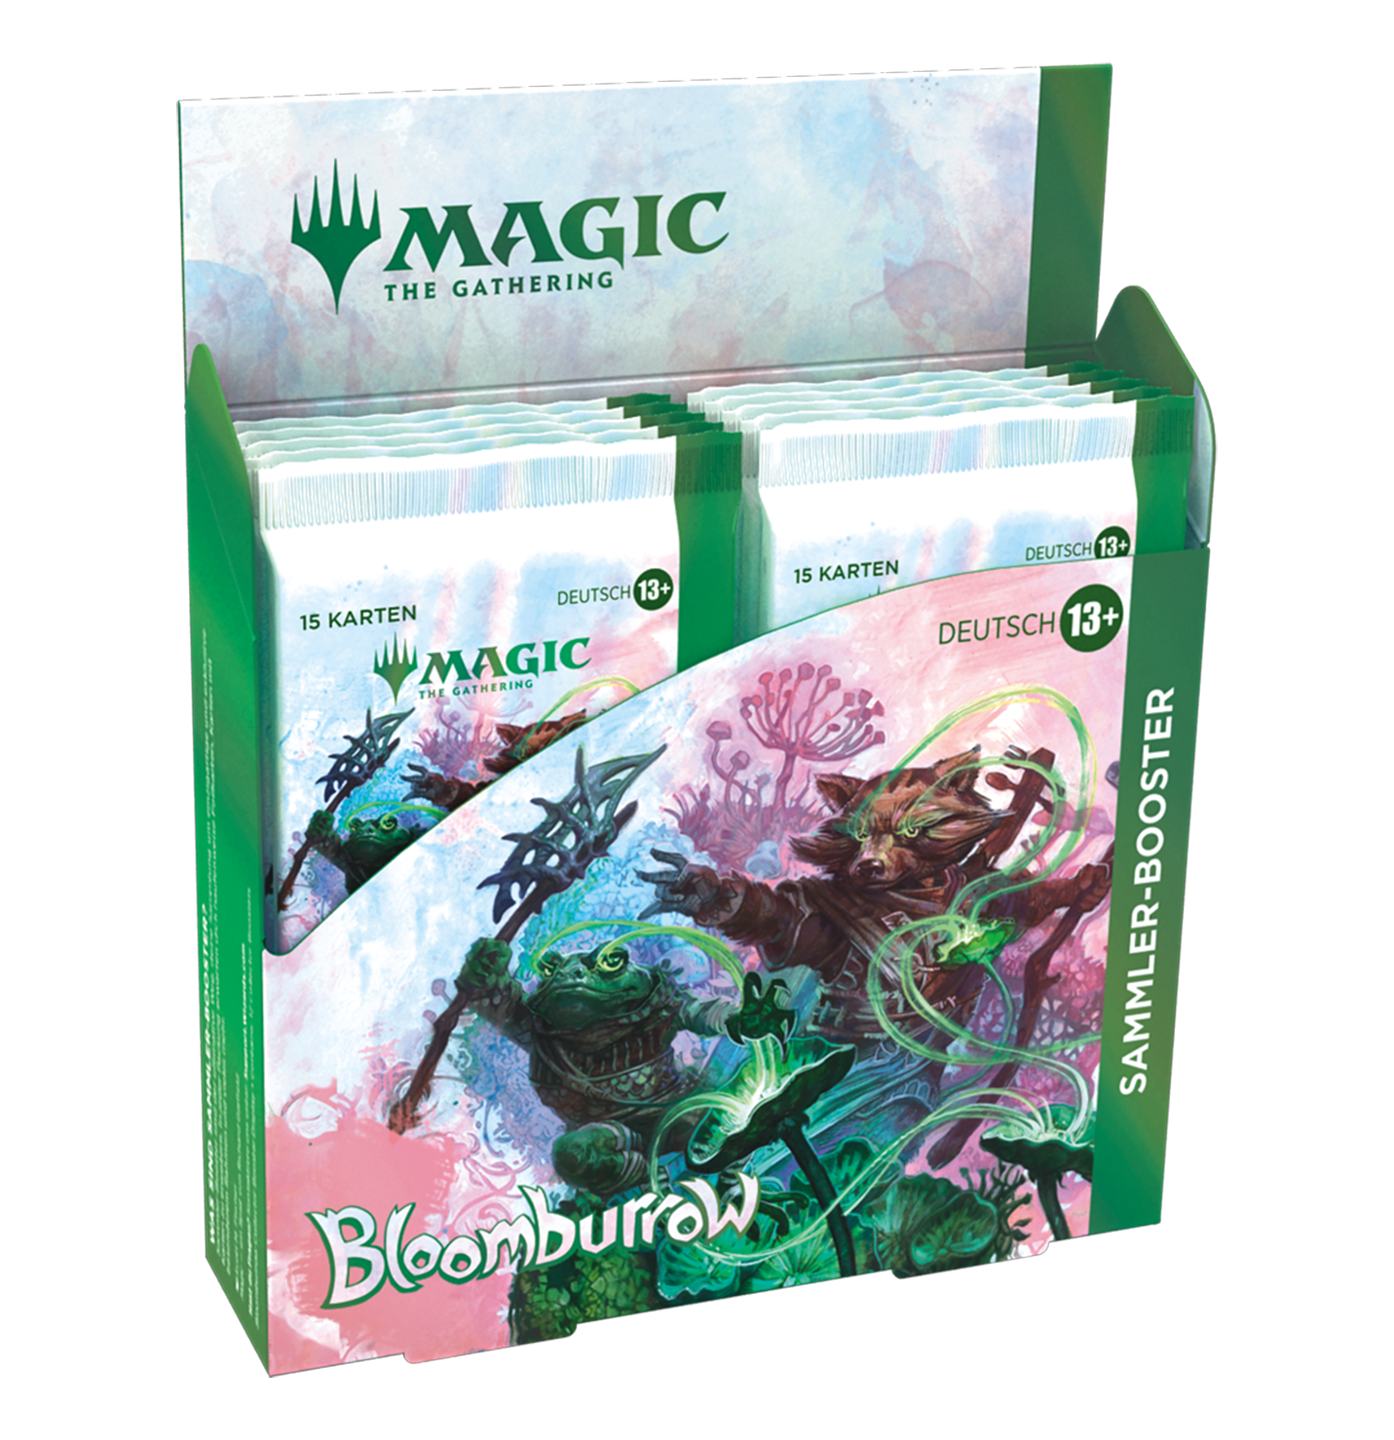 Bloomburrow Sammler Booster Display - Magic the Gathering - EN